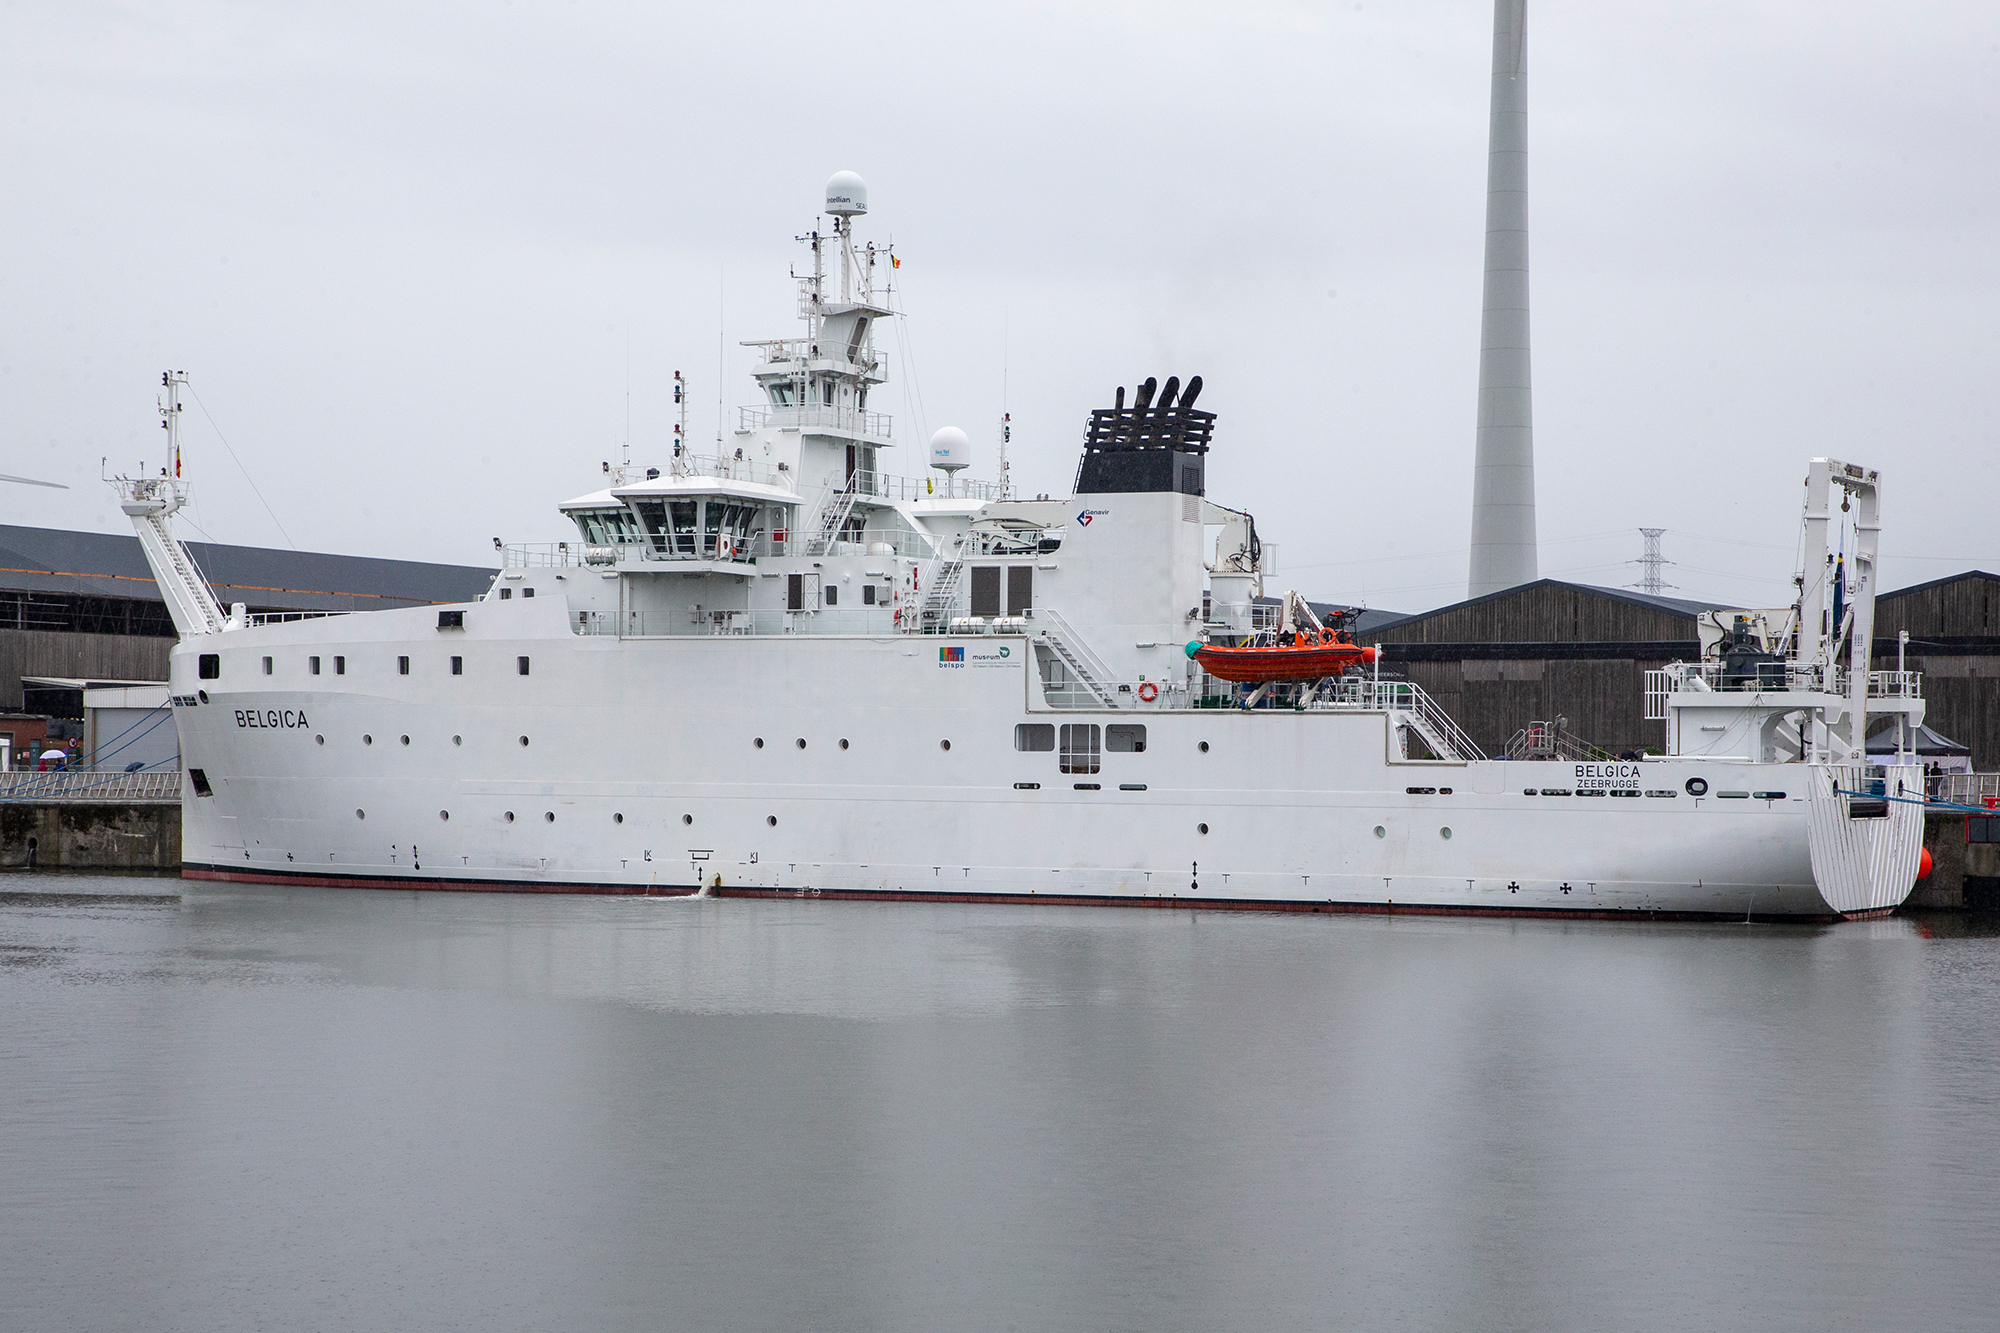 Das Forschungsschiff "Belgica" (Bild: Nicolas Maeterlinck/Belga)